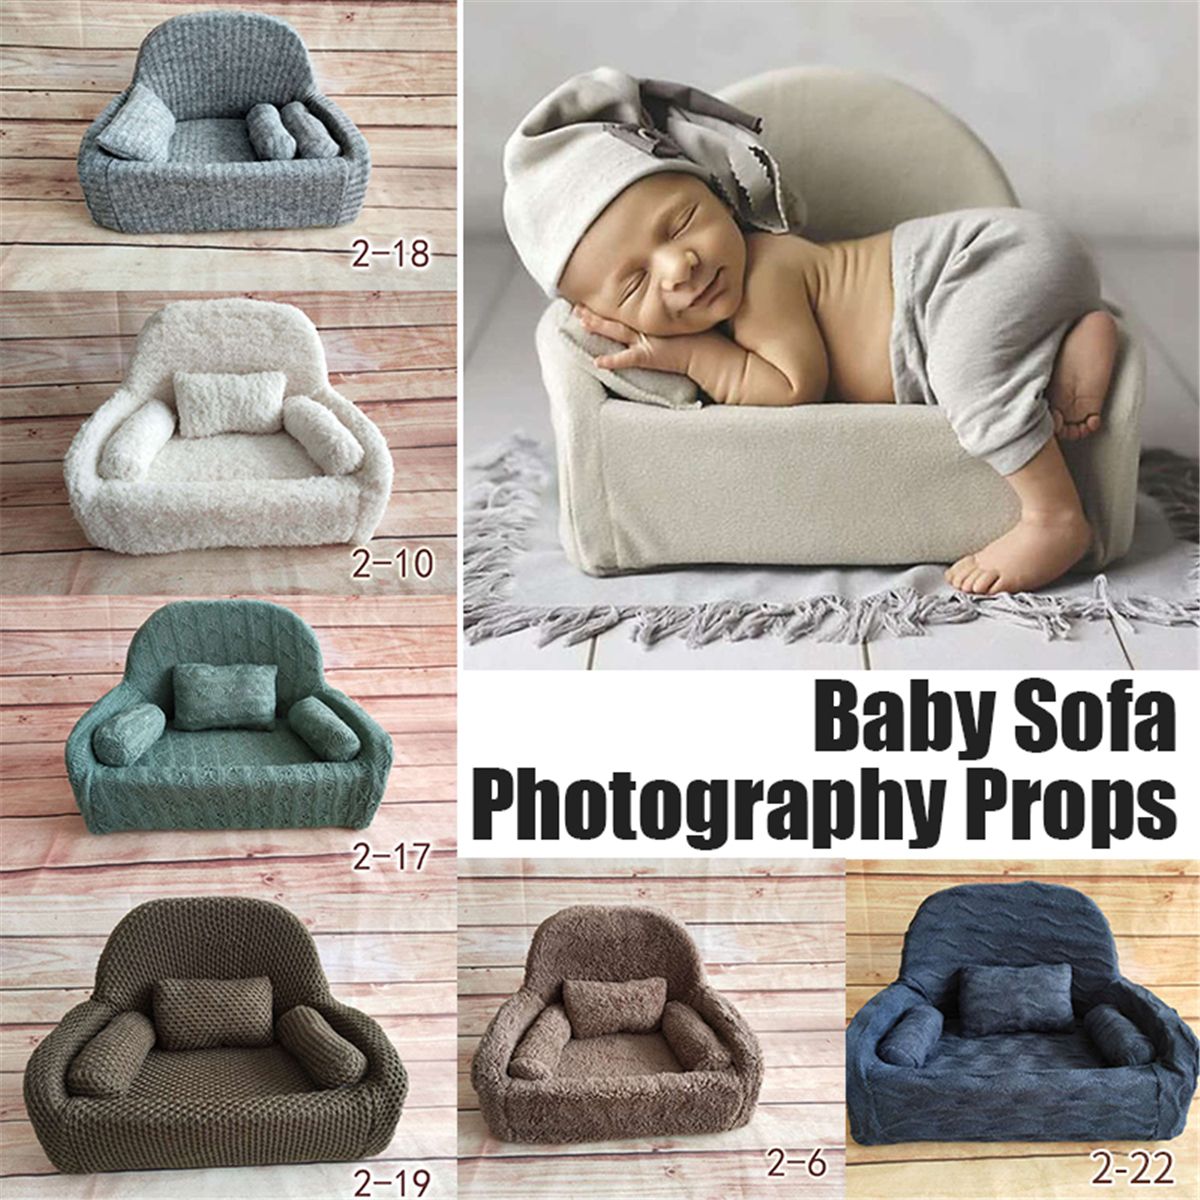 Newborn-Baby-3-Cushions-Sofa-Seat-Photo-Props-Studio-Photography-Backdrop-Decorations-1573677